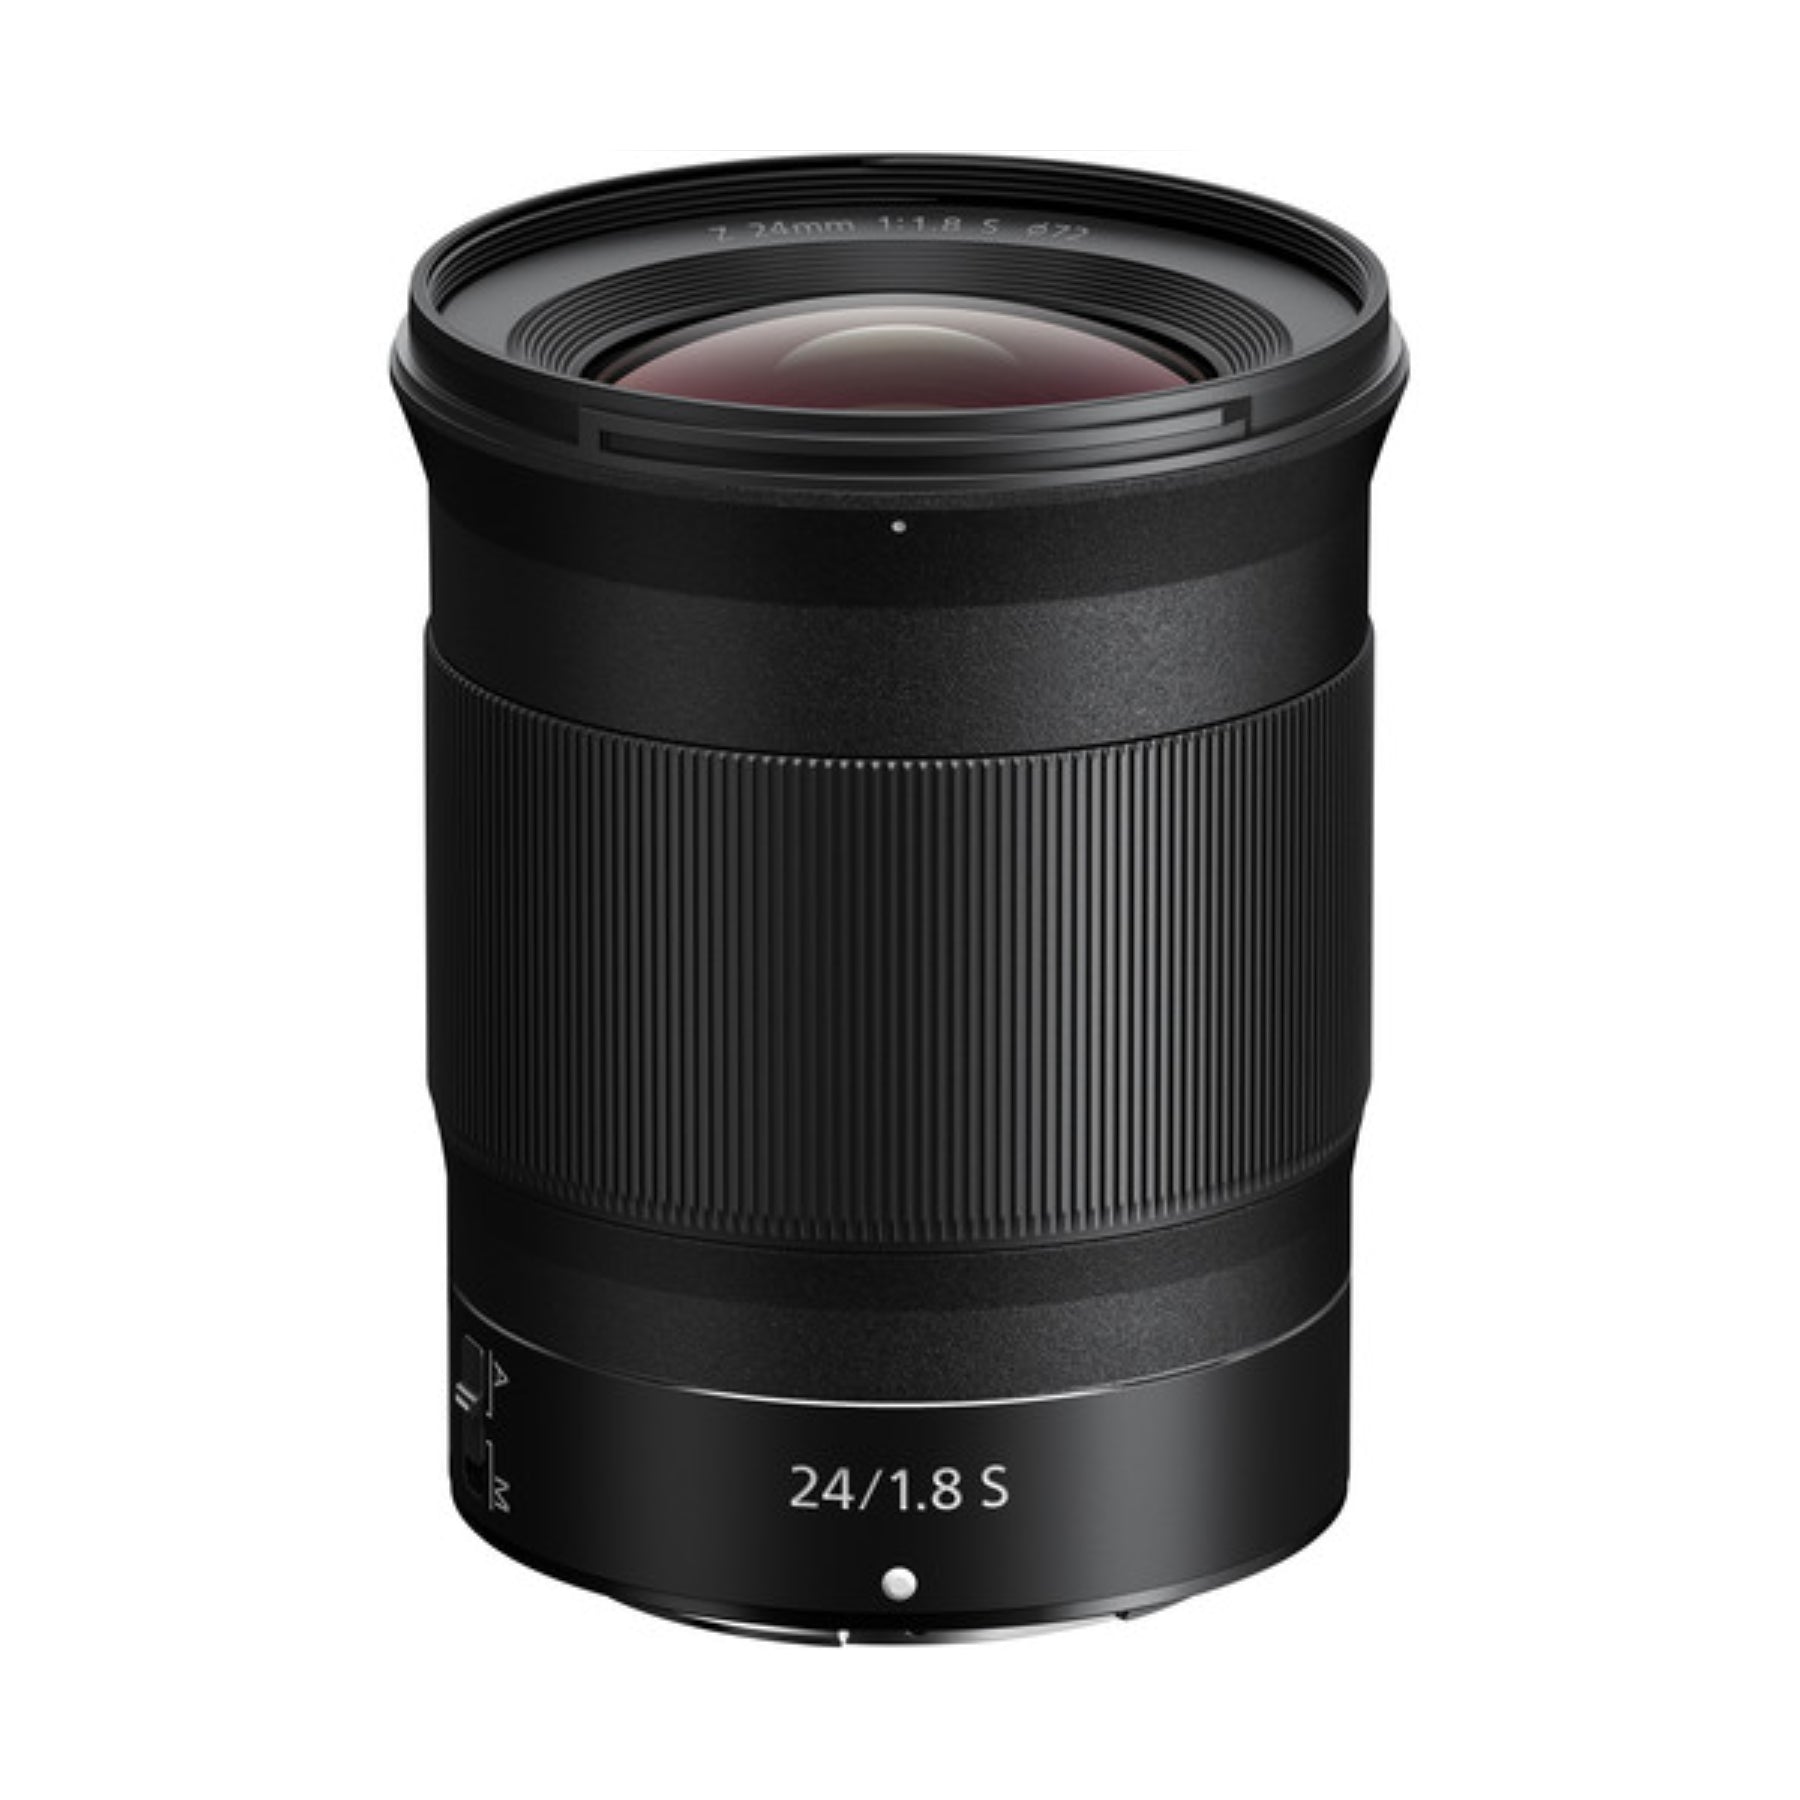 Buy Nikon NIKKOR Z 24mm f/1.8 S Lens at Topic Store